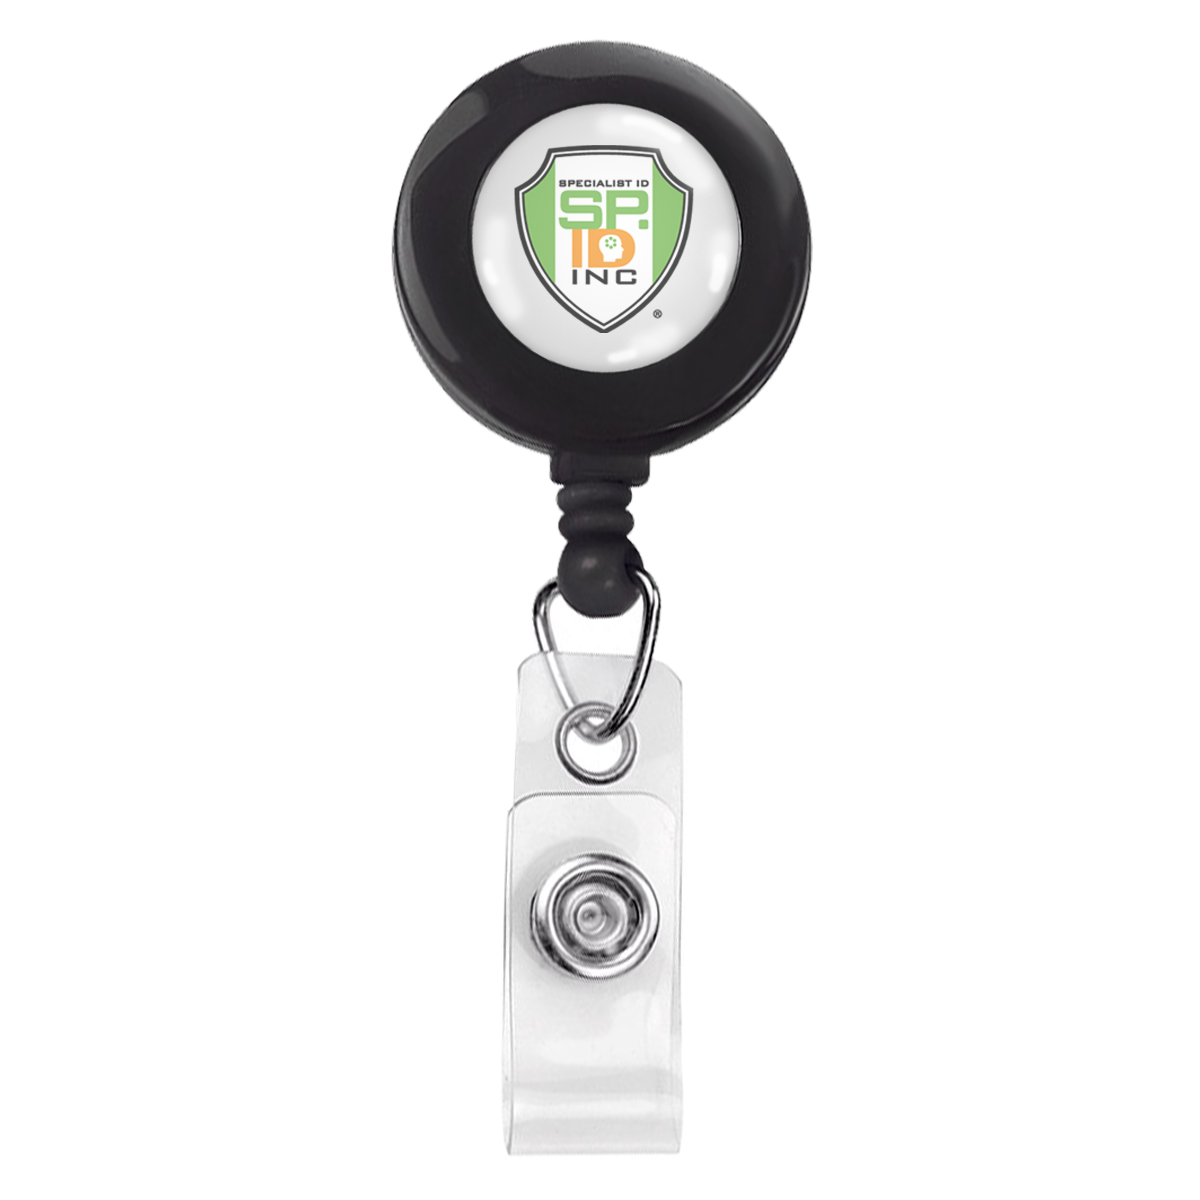 customizable badge reels - standard retractable custom badge reels for business branding 2120-3031 black